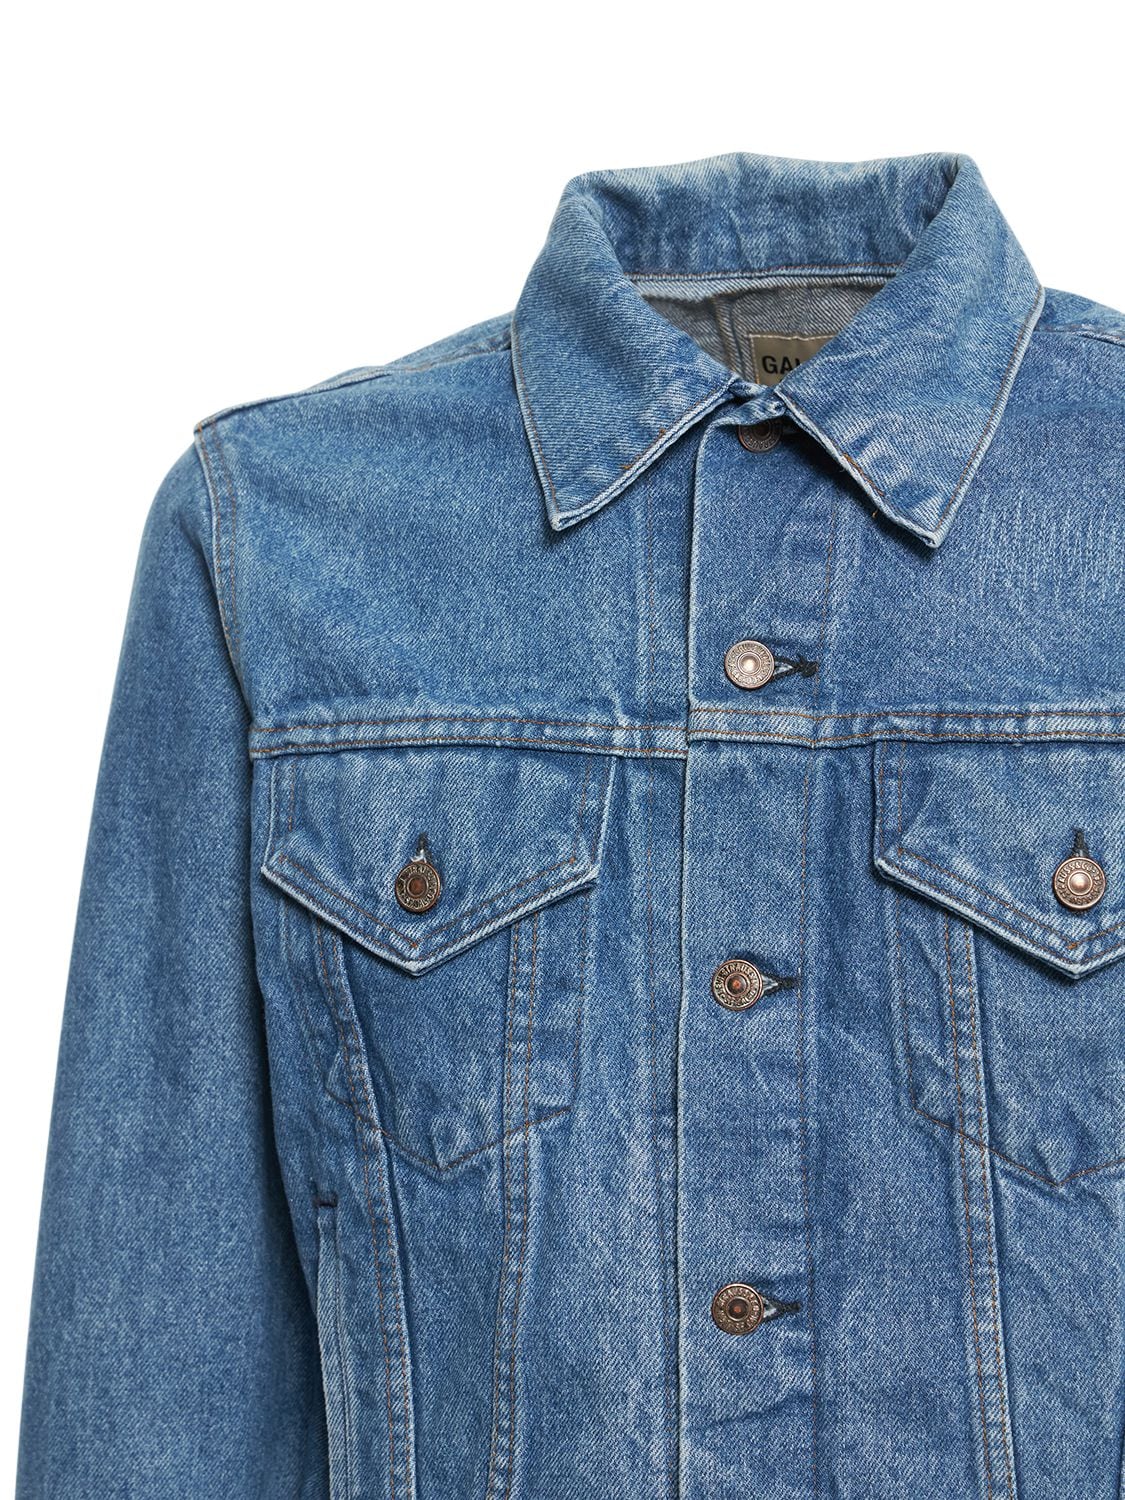 Gallery Dept. Andy Vintage Denim Jacket In Blue | ModeSens